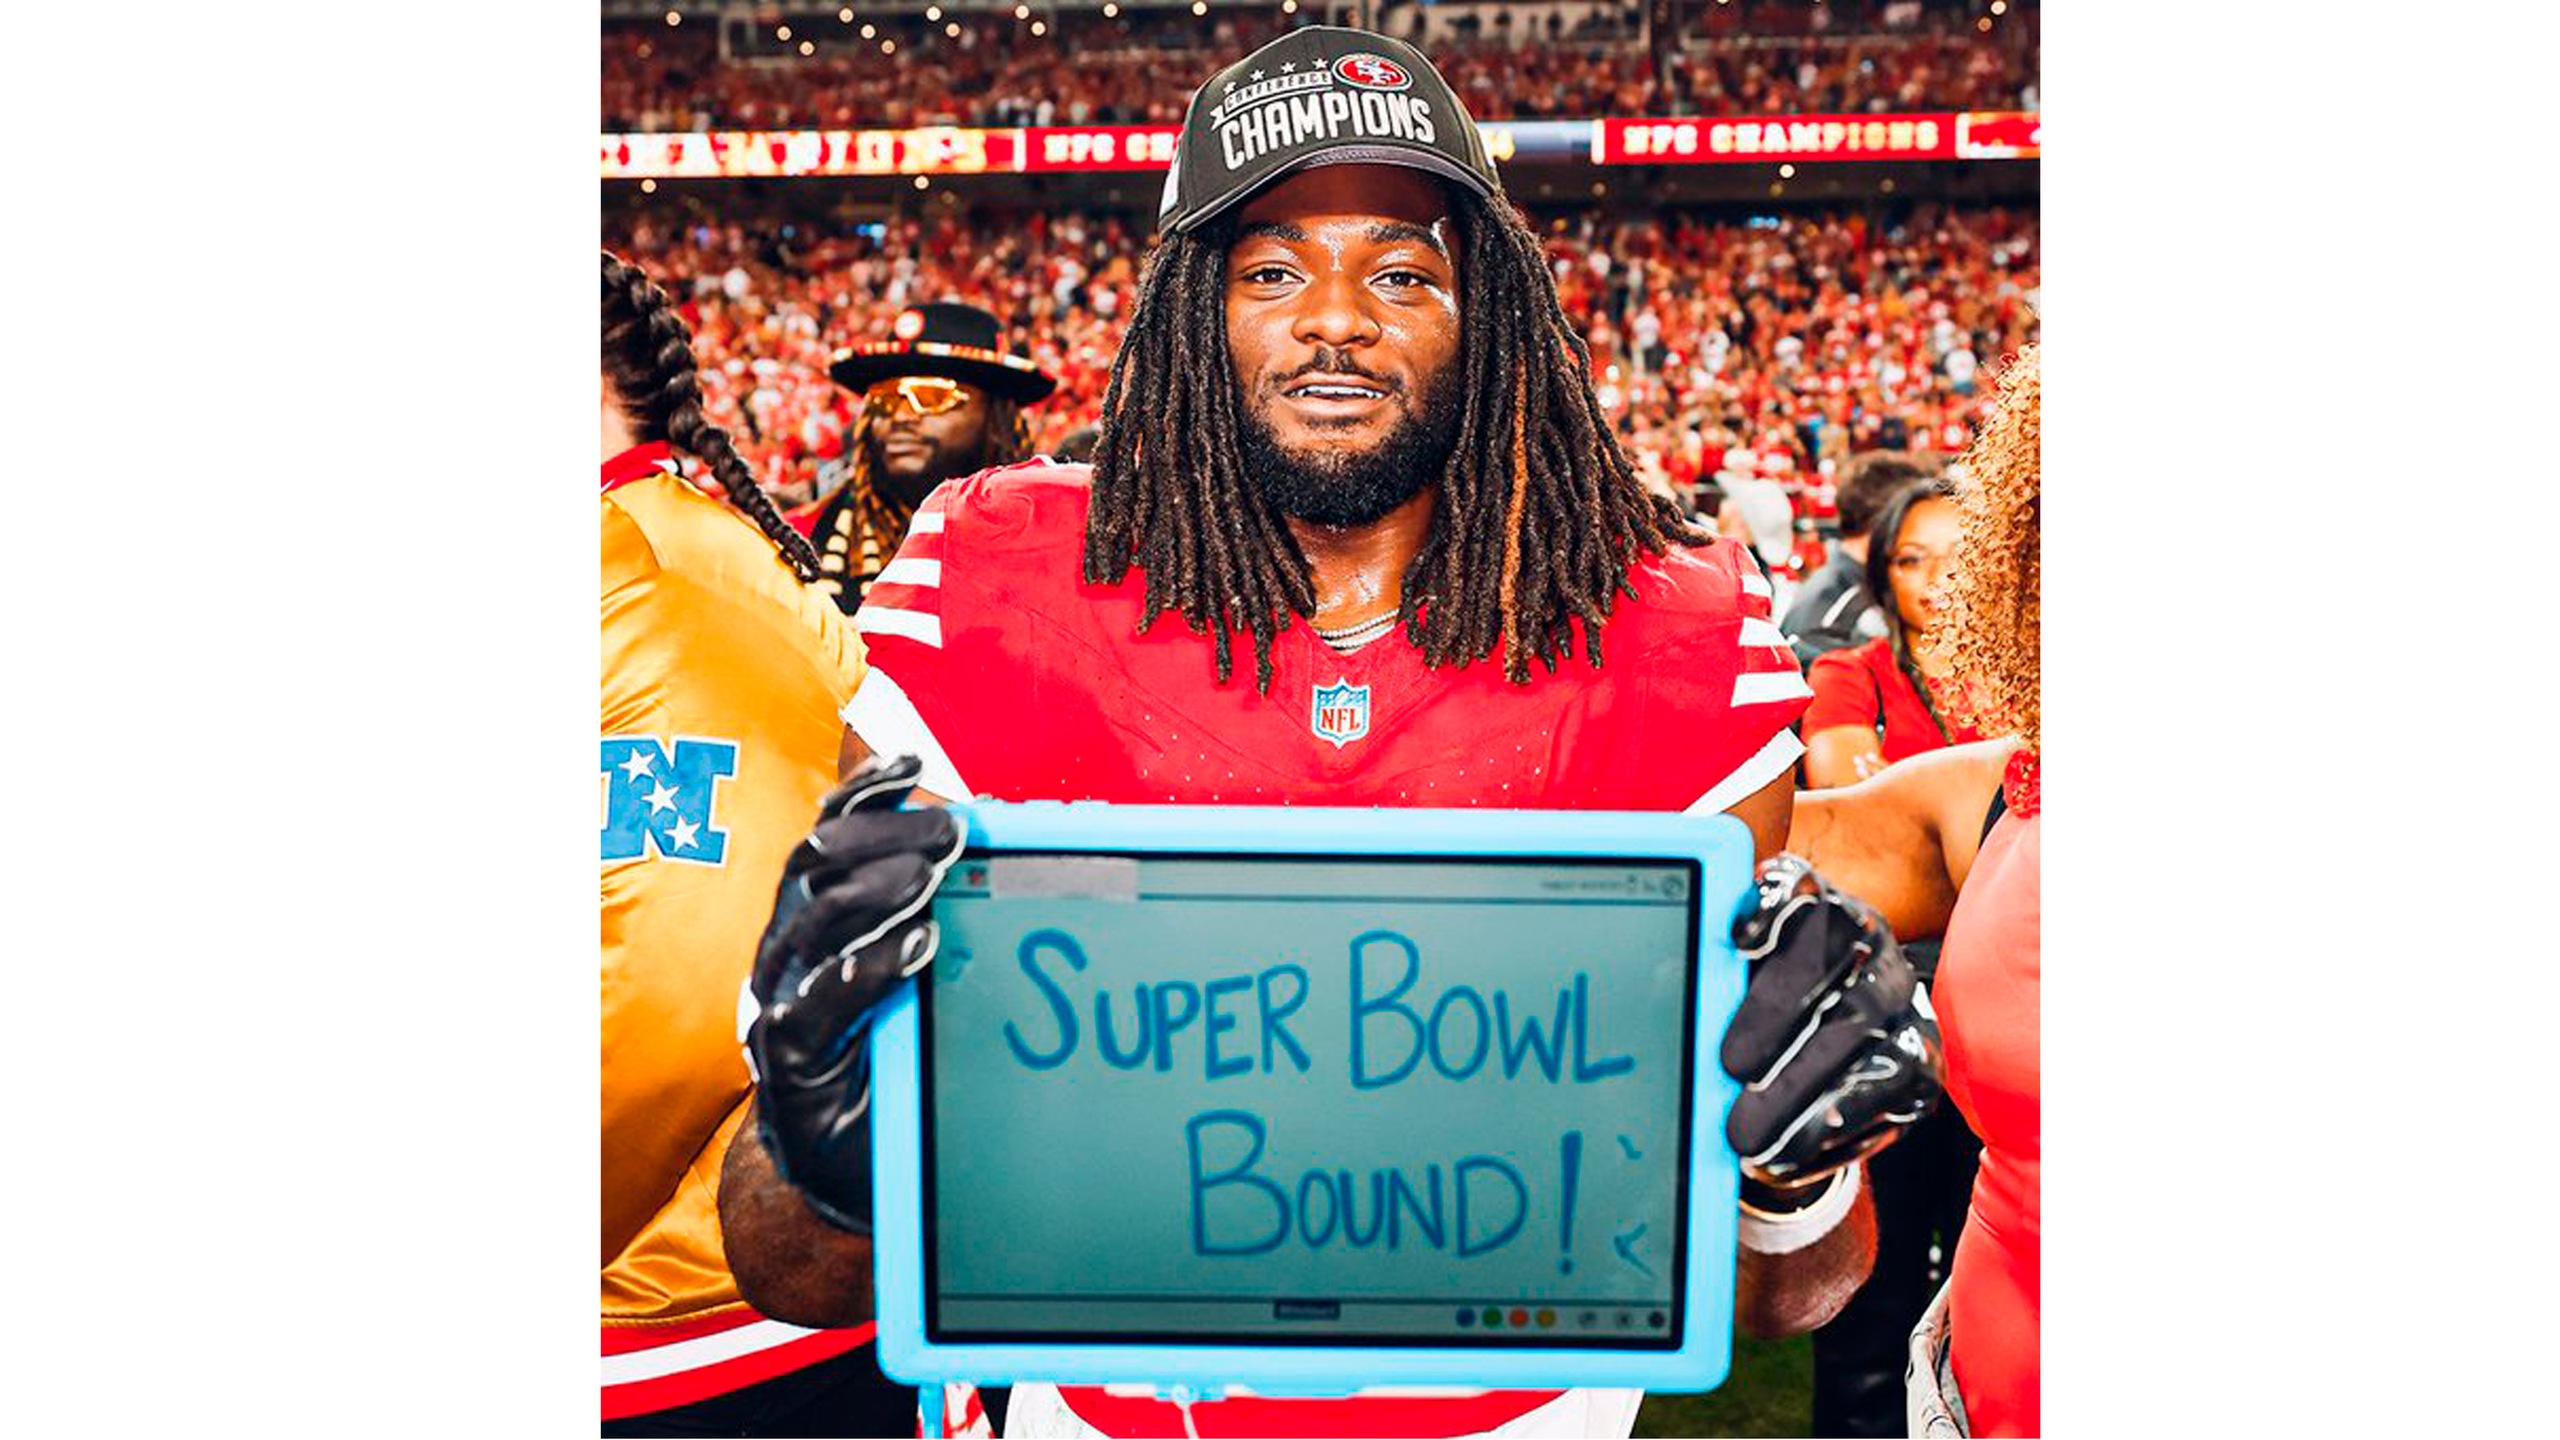 Sierra alumni Brandon Aiyuk is Super Bowl bound! Image courtesy of SF 49ers & Microsoft Surface